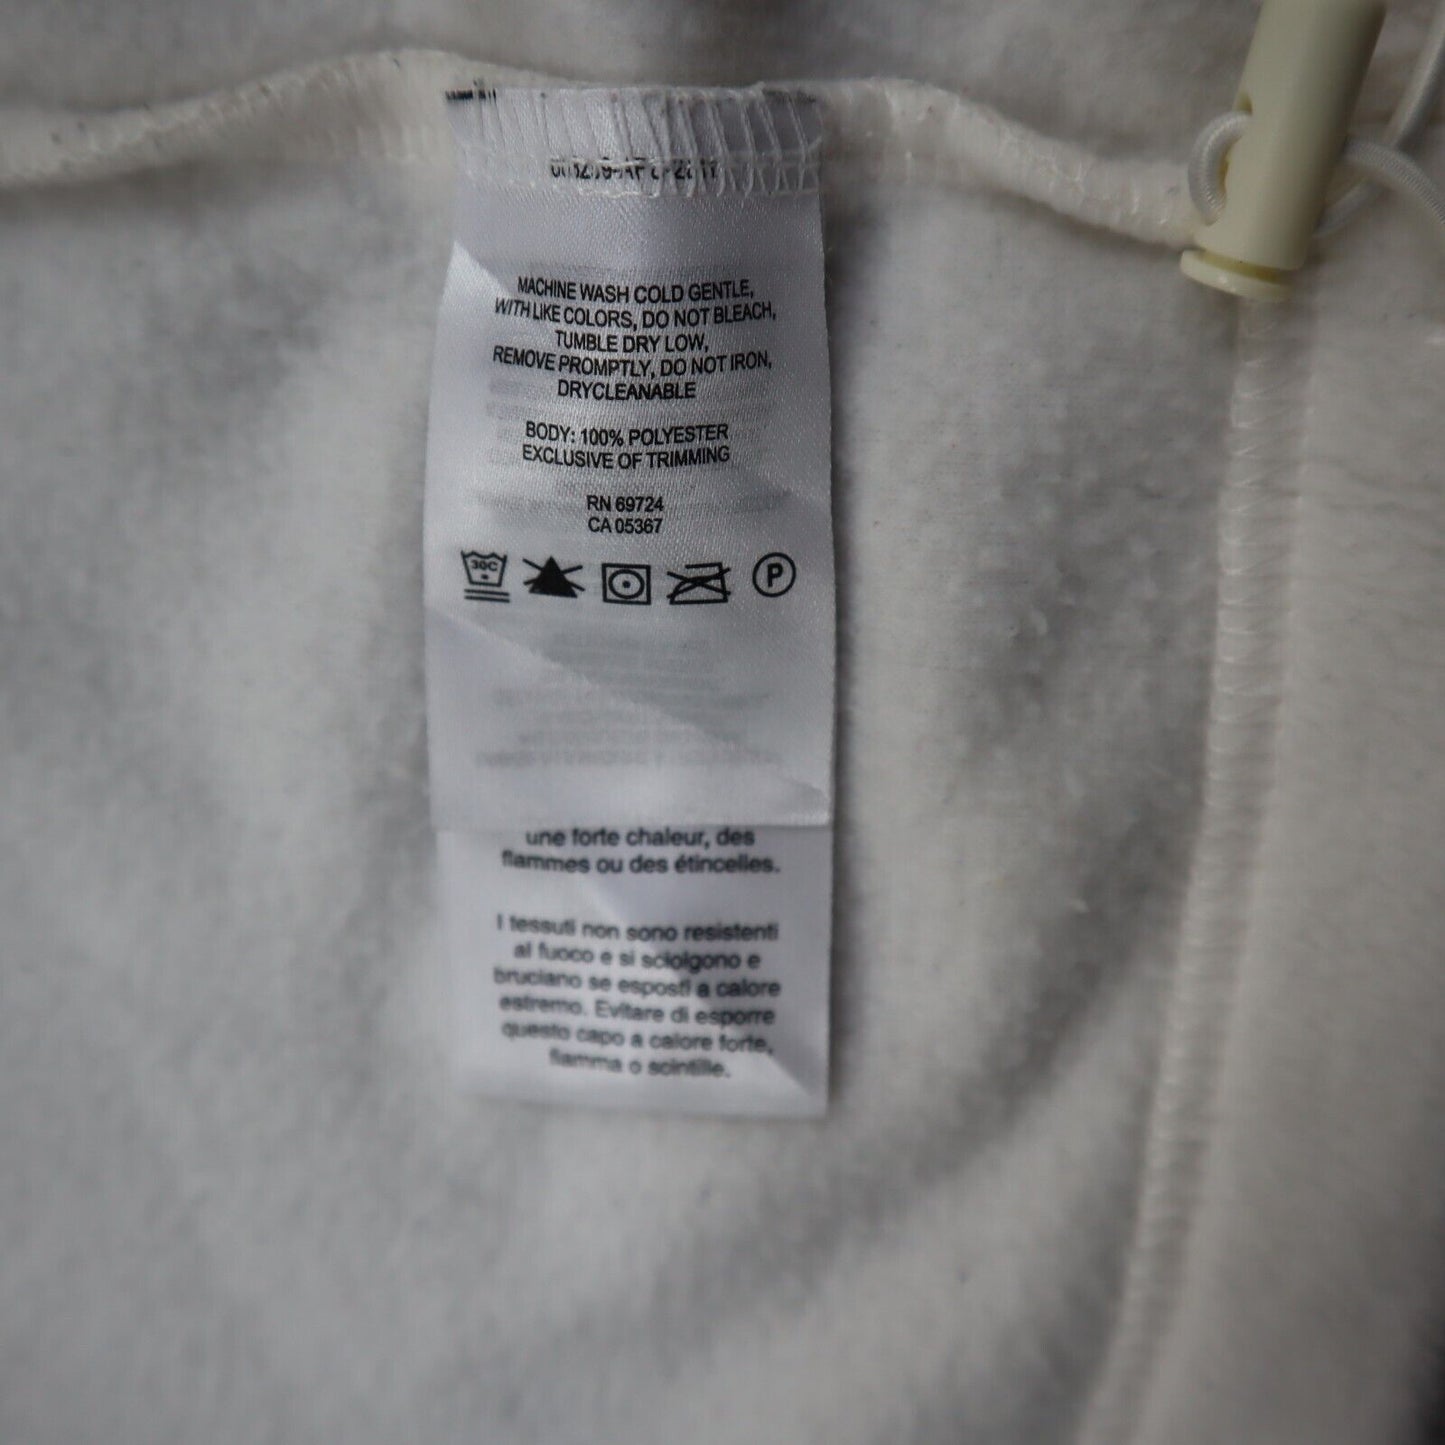 Columbia Mens Full Zip Sweatshirt Jacket Long Sleeves Mock Neck White Size XL